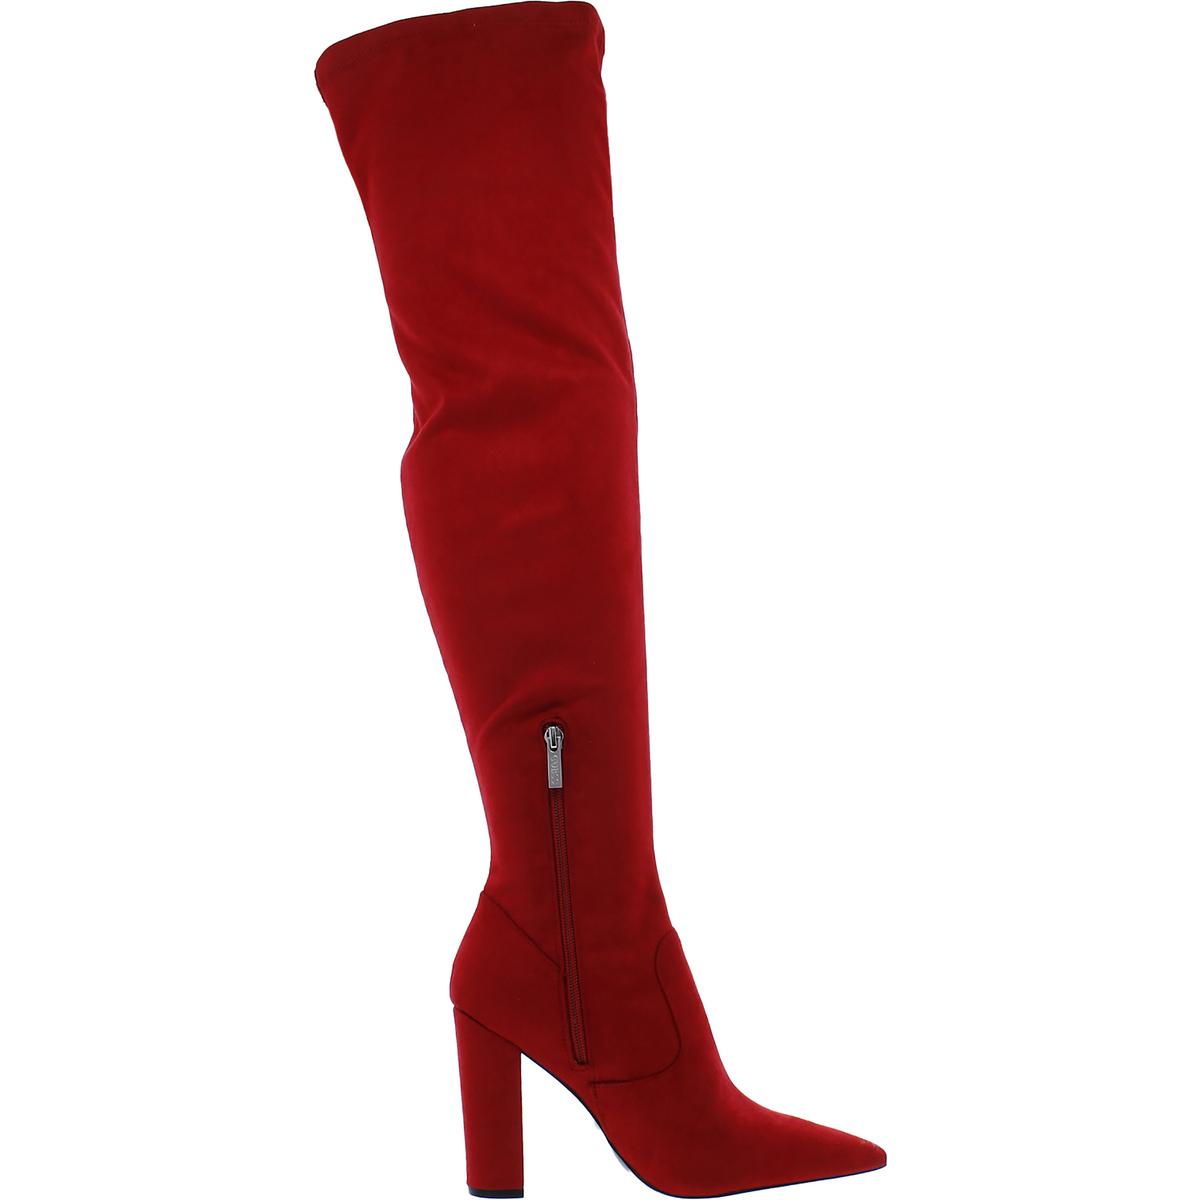 Guess Womens Abetter Zipper Over-The-Knee Boots Shoes BHFO 5785 | eBay